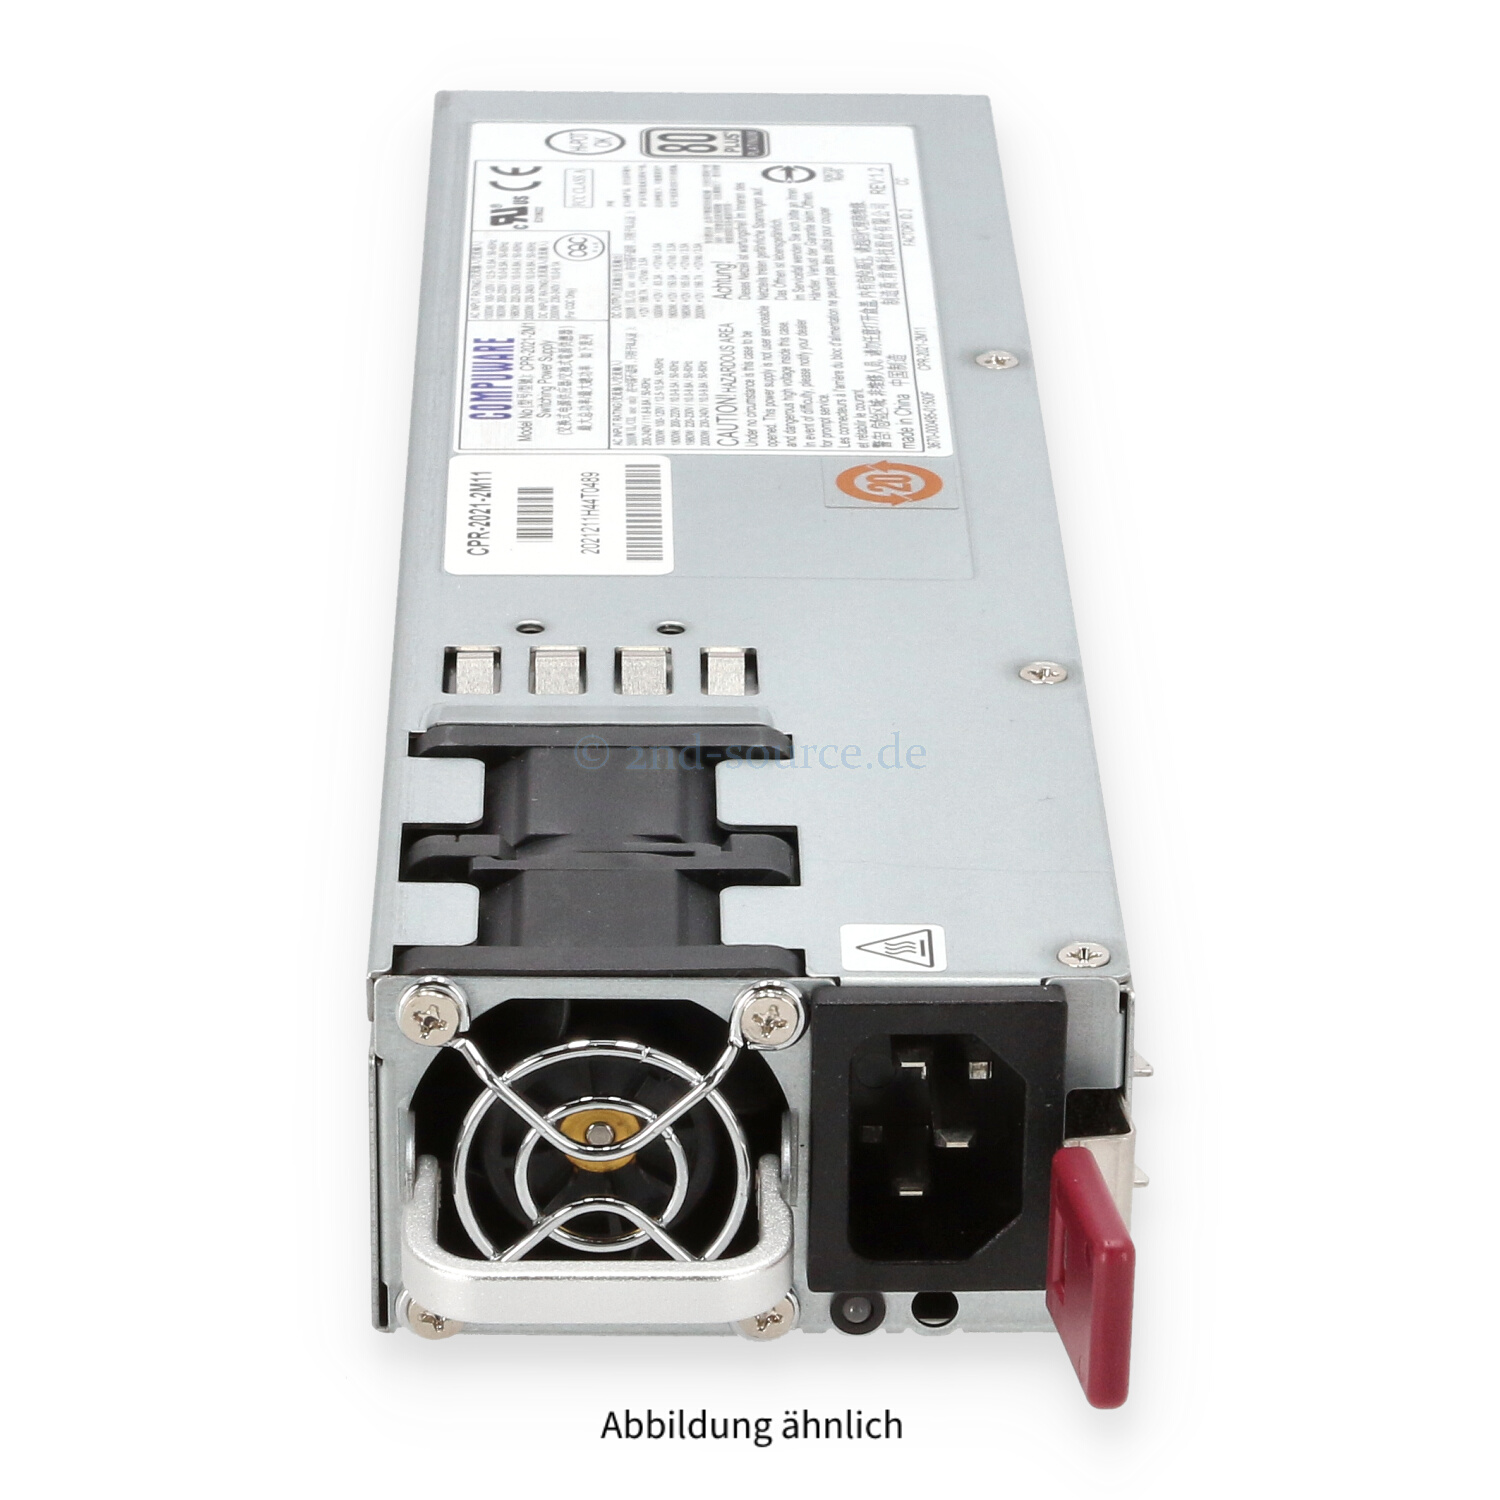 Compuware 2000W 80 Plus Platinum HotPlug Power Supply CPR-2021-2M11